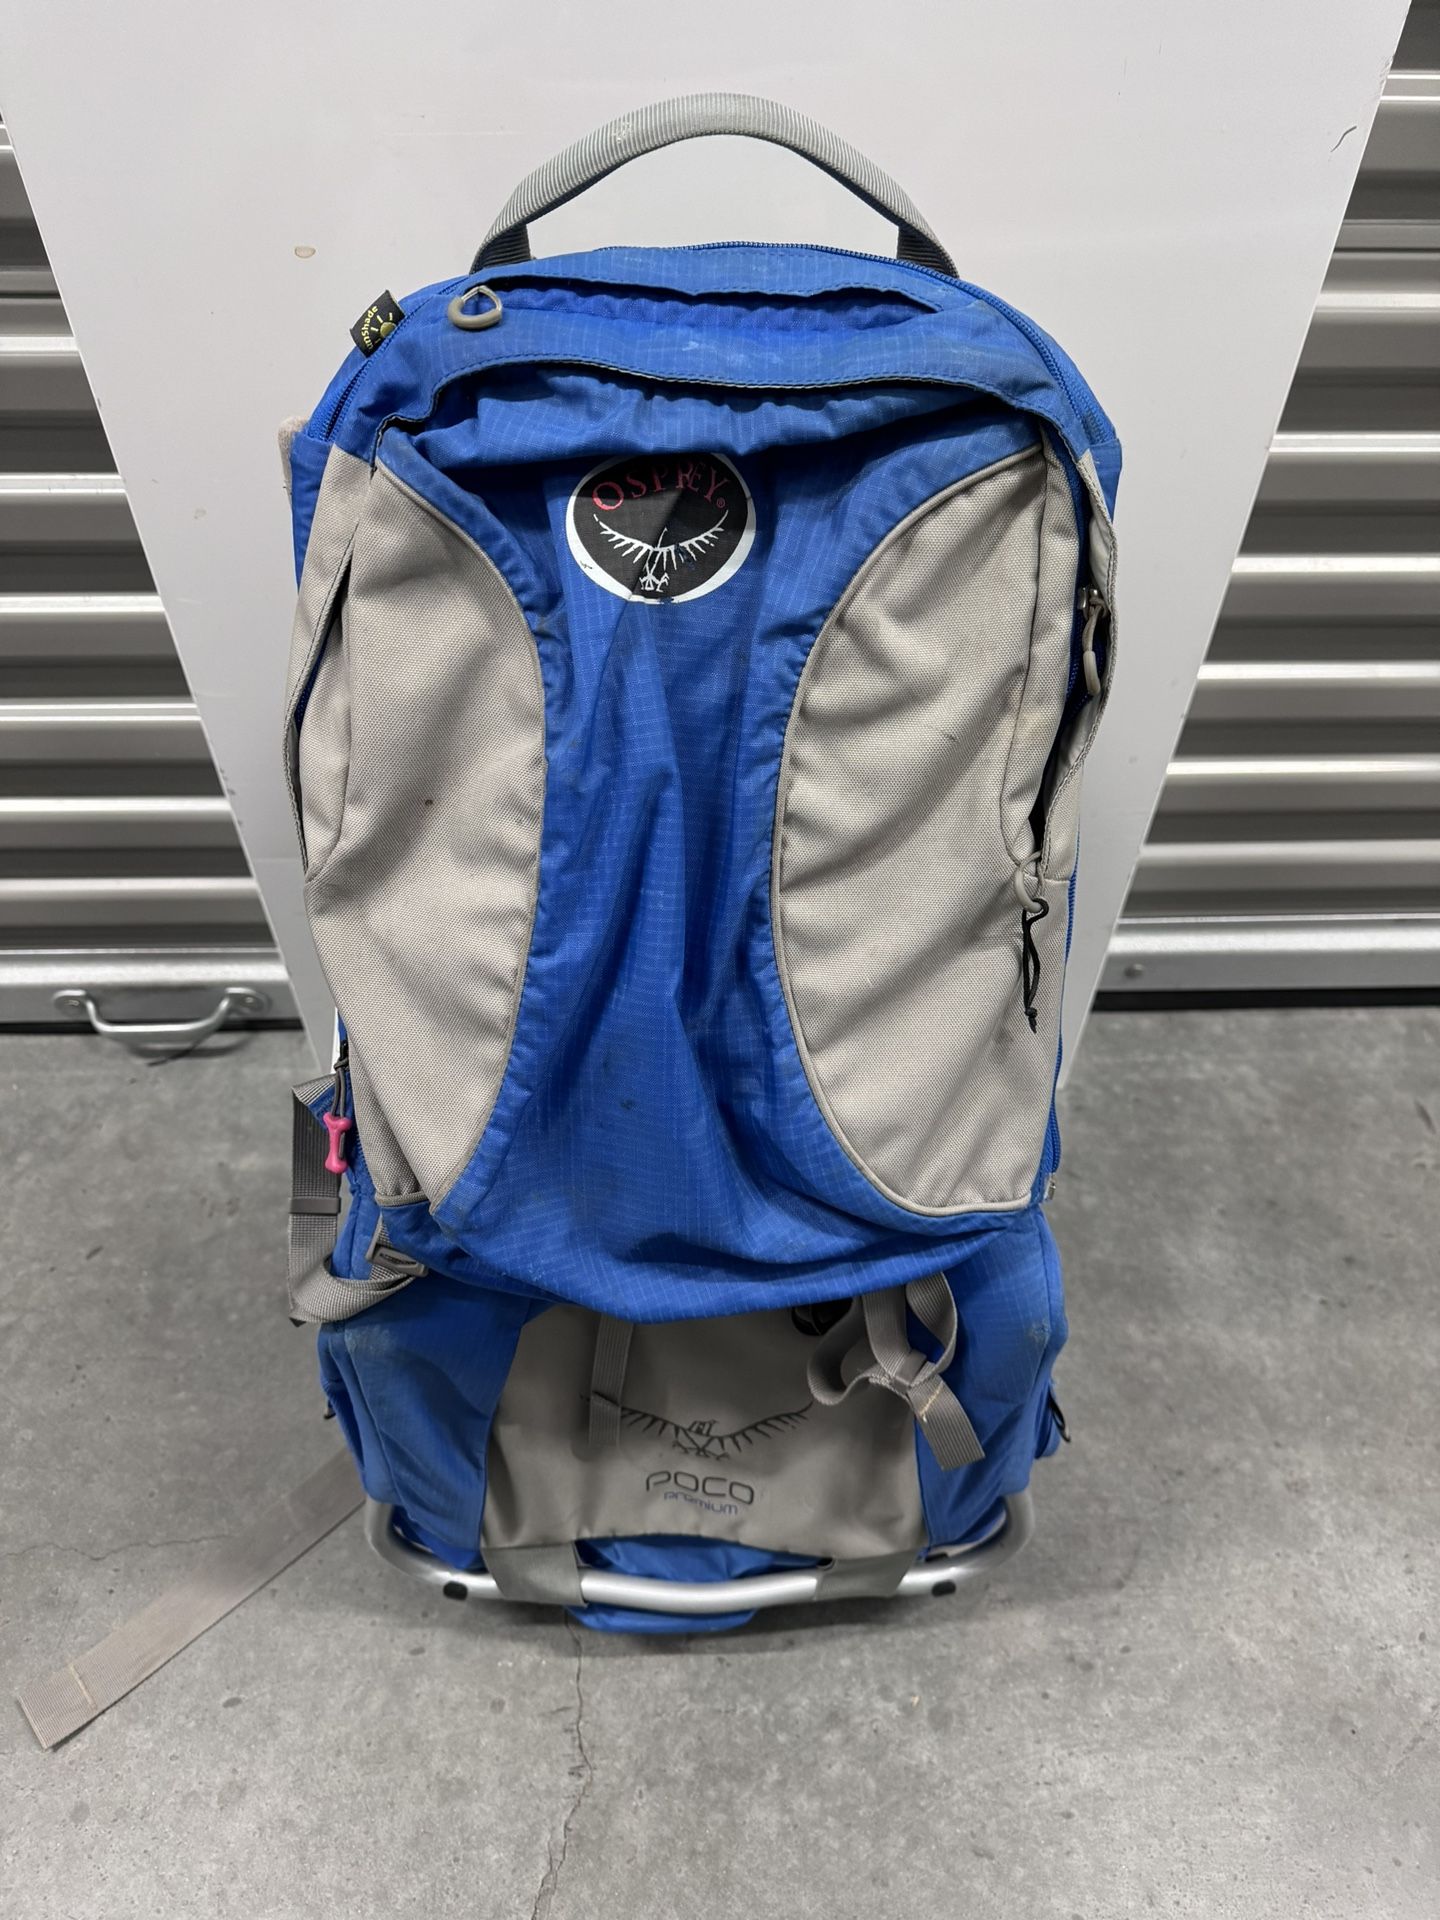 Osprey Poco Premium Blue Detachable Bag Child Backpack Carrier